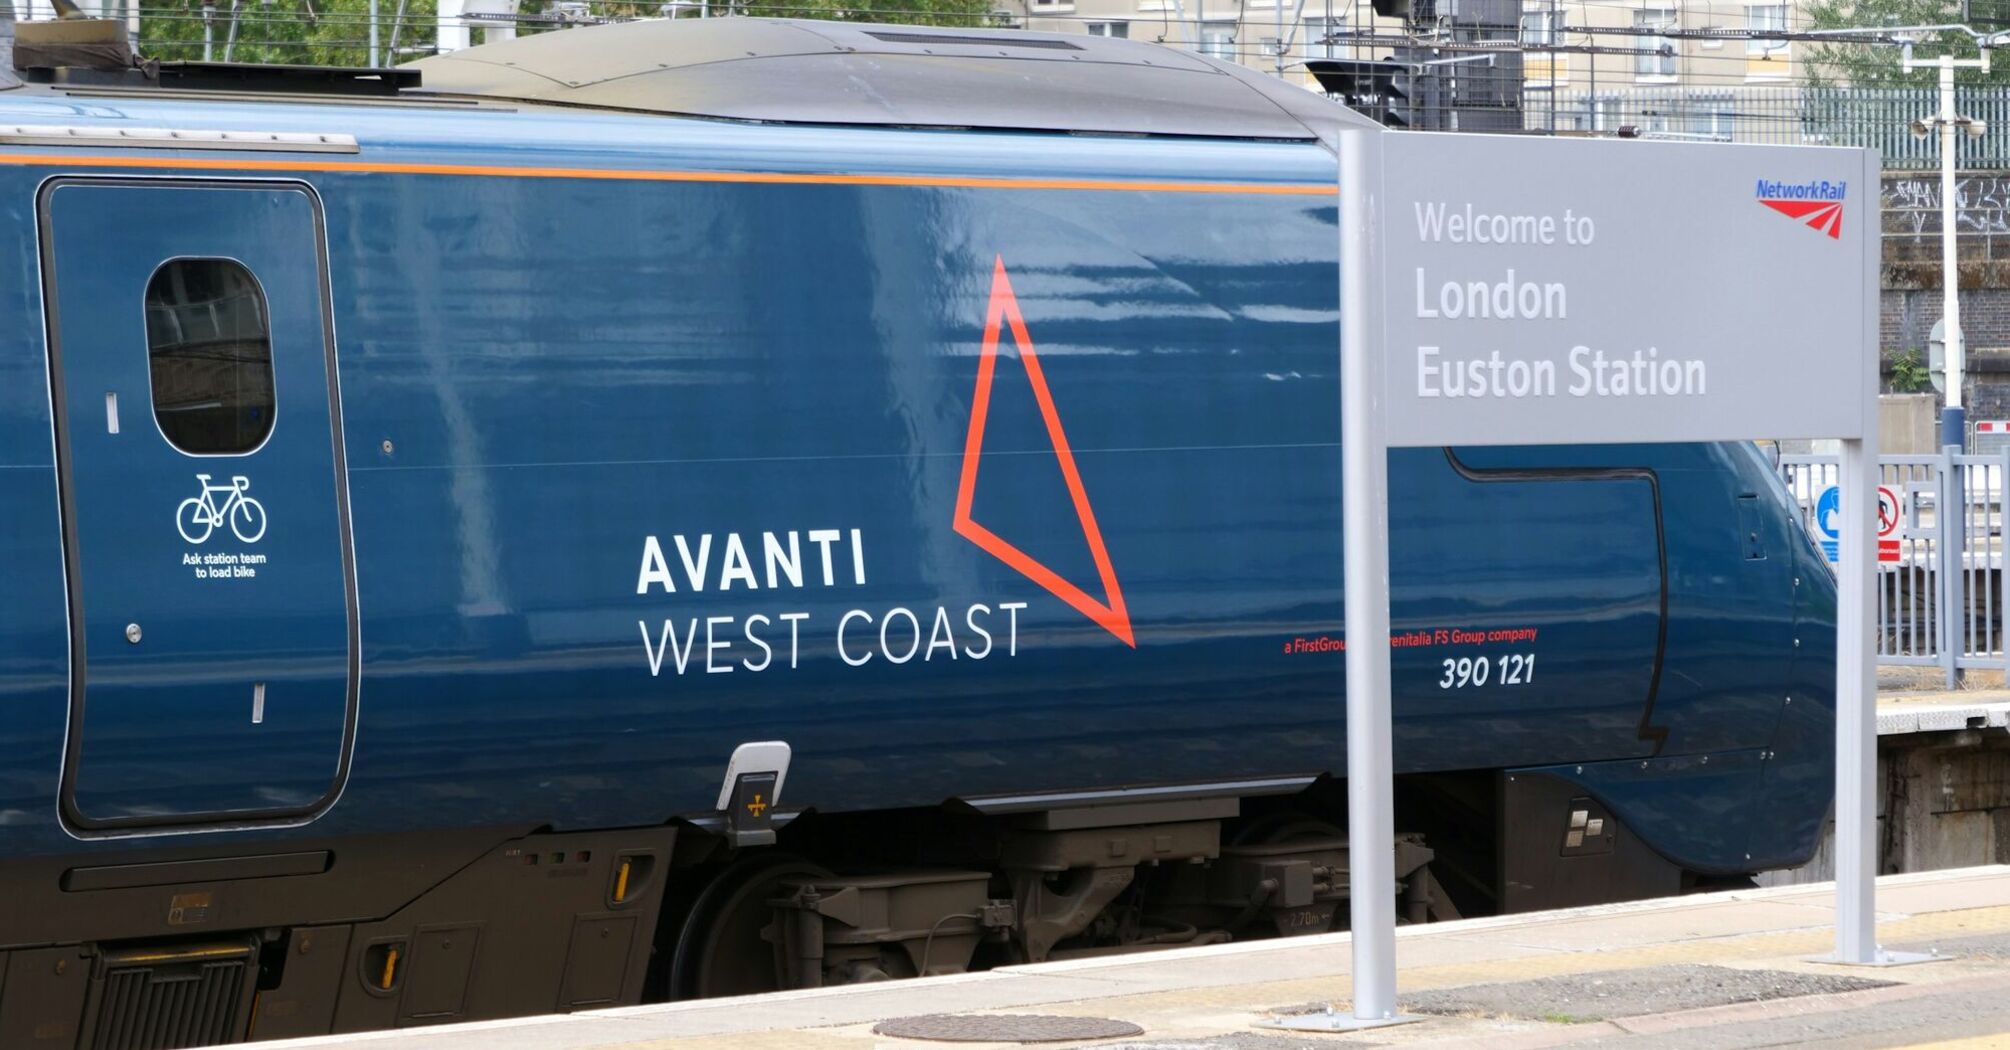 A blue Avanti West Coast train at London Euston Station